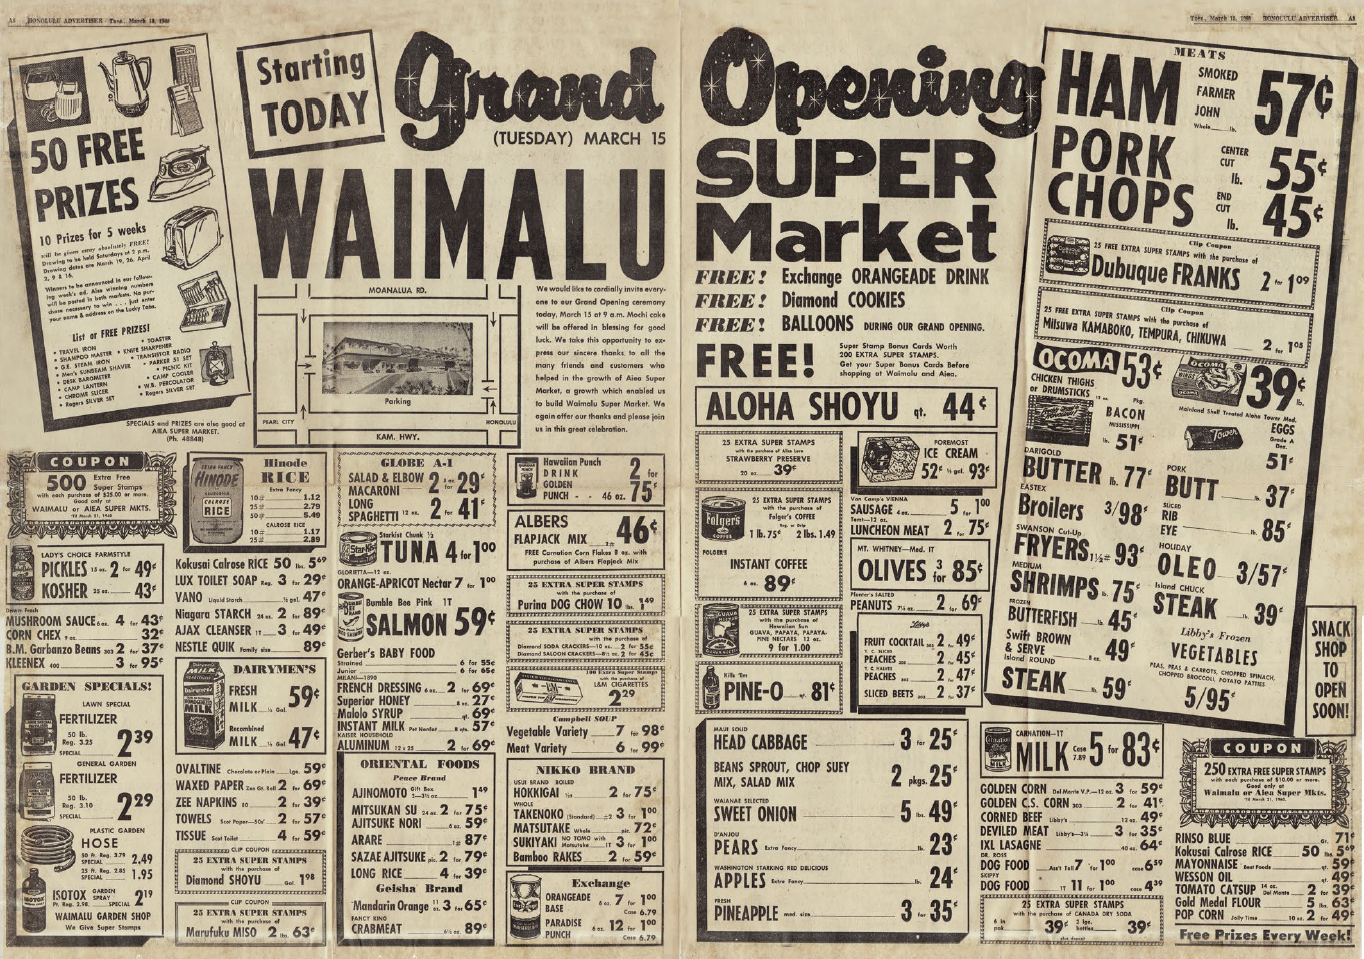 Waimalu Super Market Opens to the Public